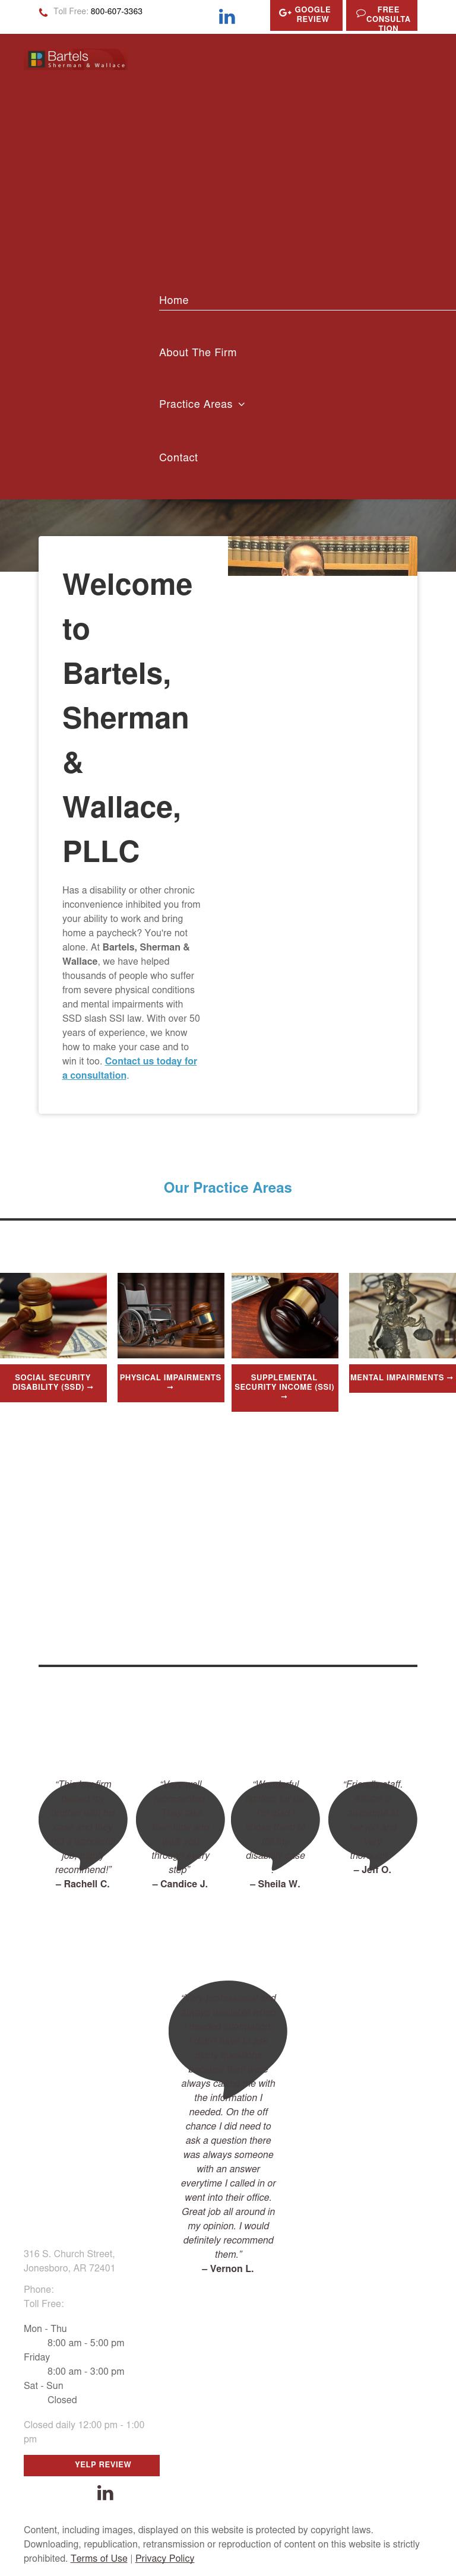 Bartels Law Firm - Jonesboro AR Lawyers